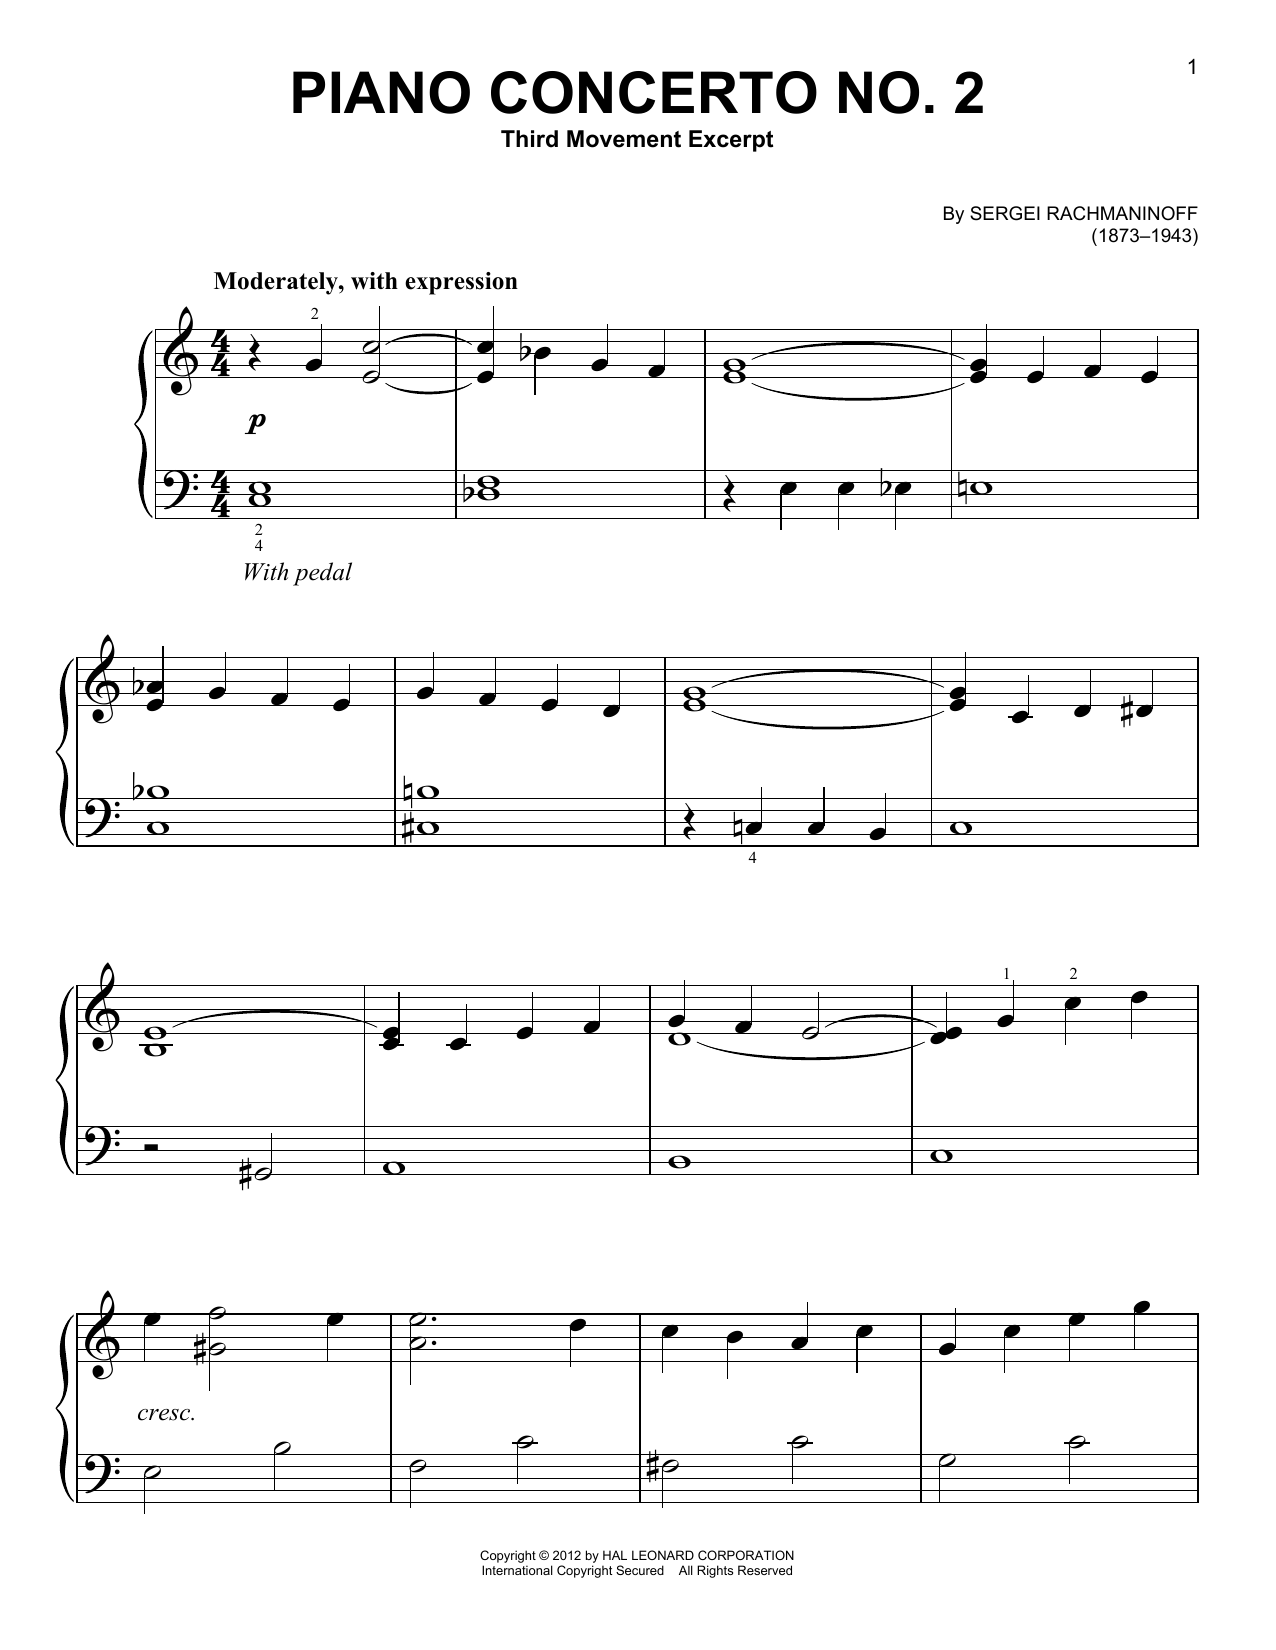 Download Sergei Rachmaninoff Piano Concerto No. 2, Third Movement Ex Sheet Music